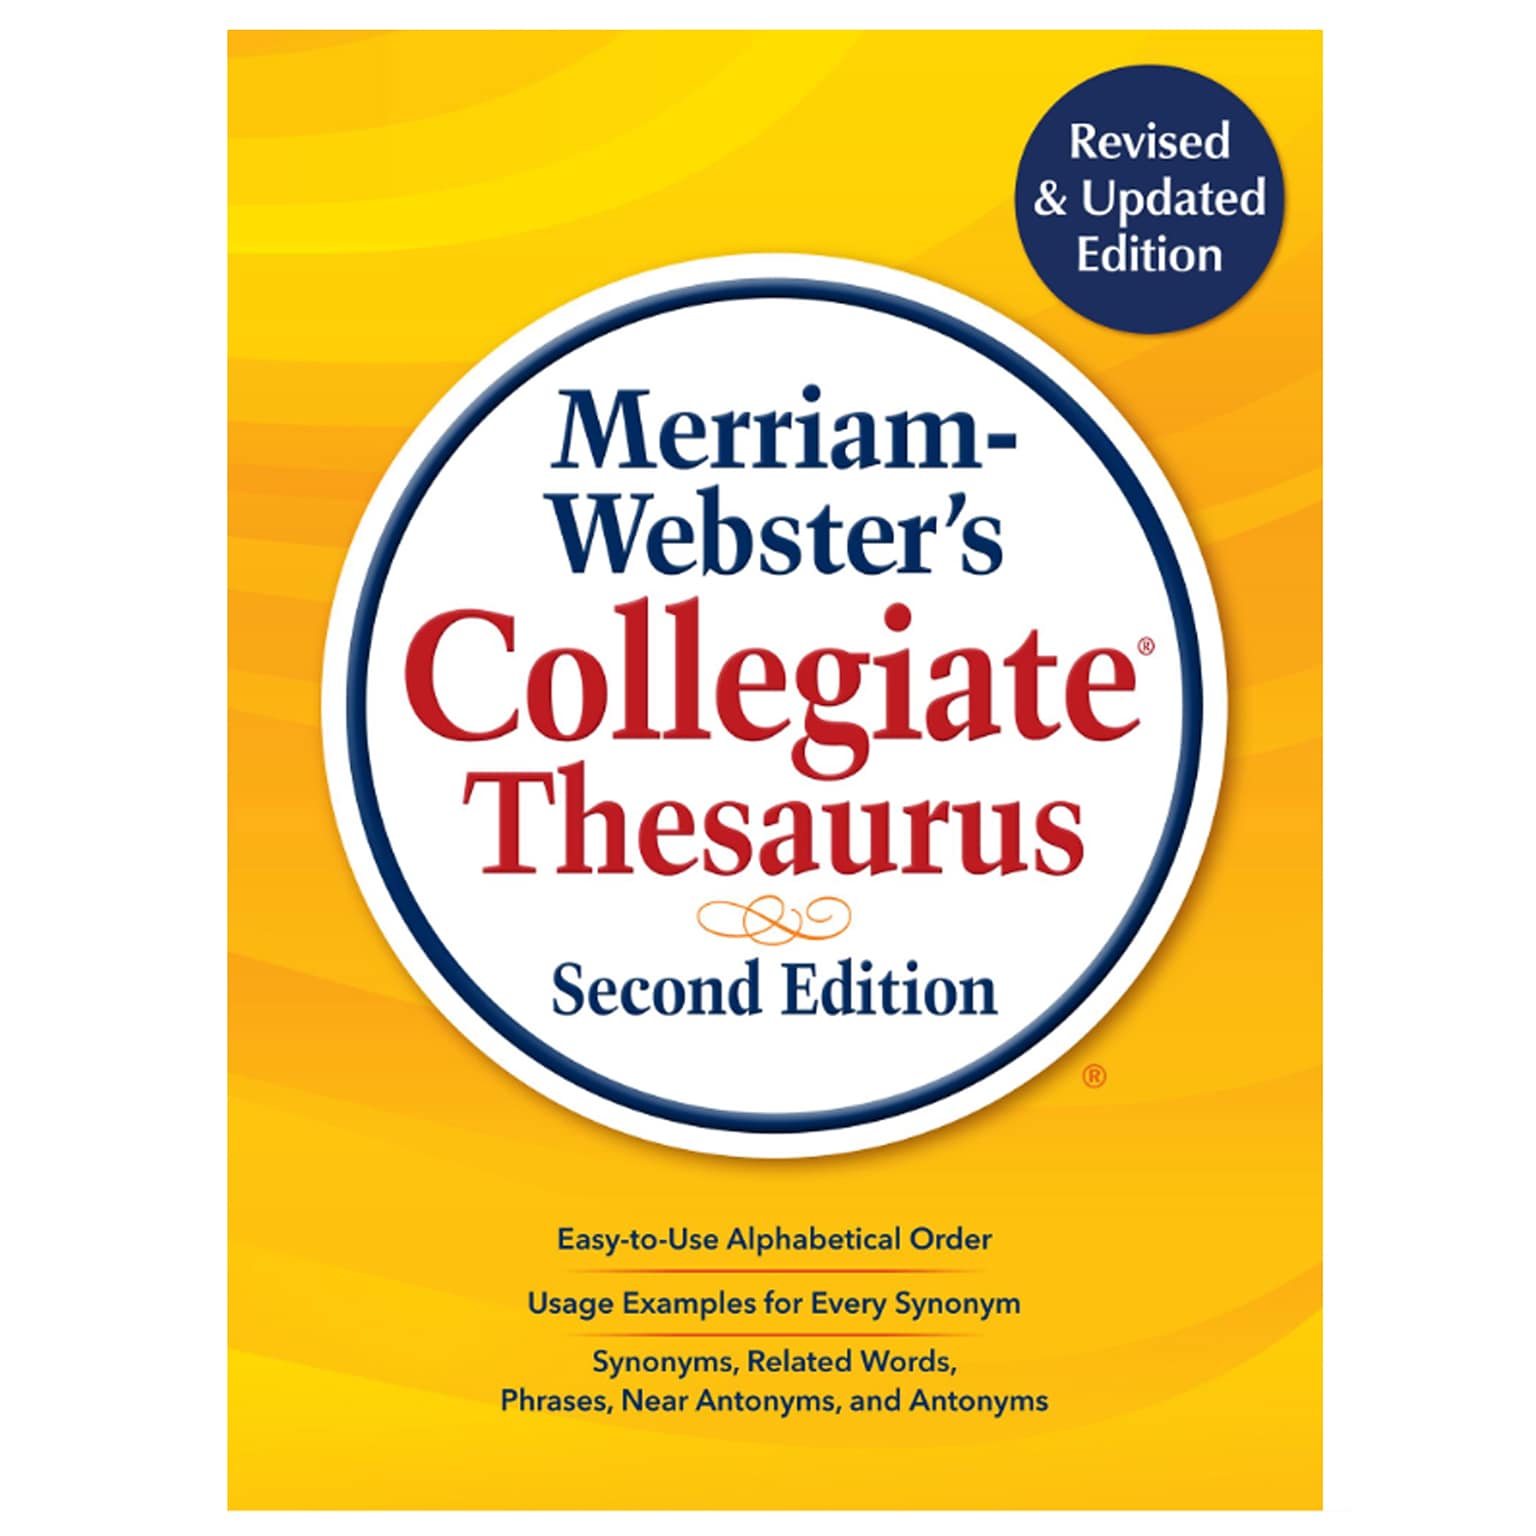 Merriam-Websters Collegiate Thesaurus, Second Edtion (9780877793700)